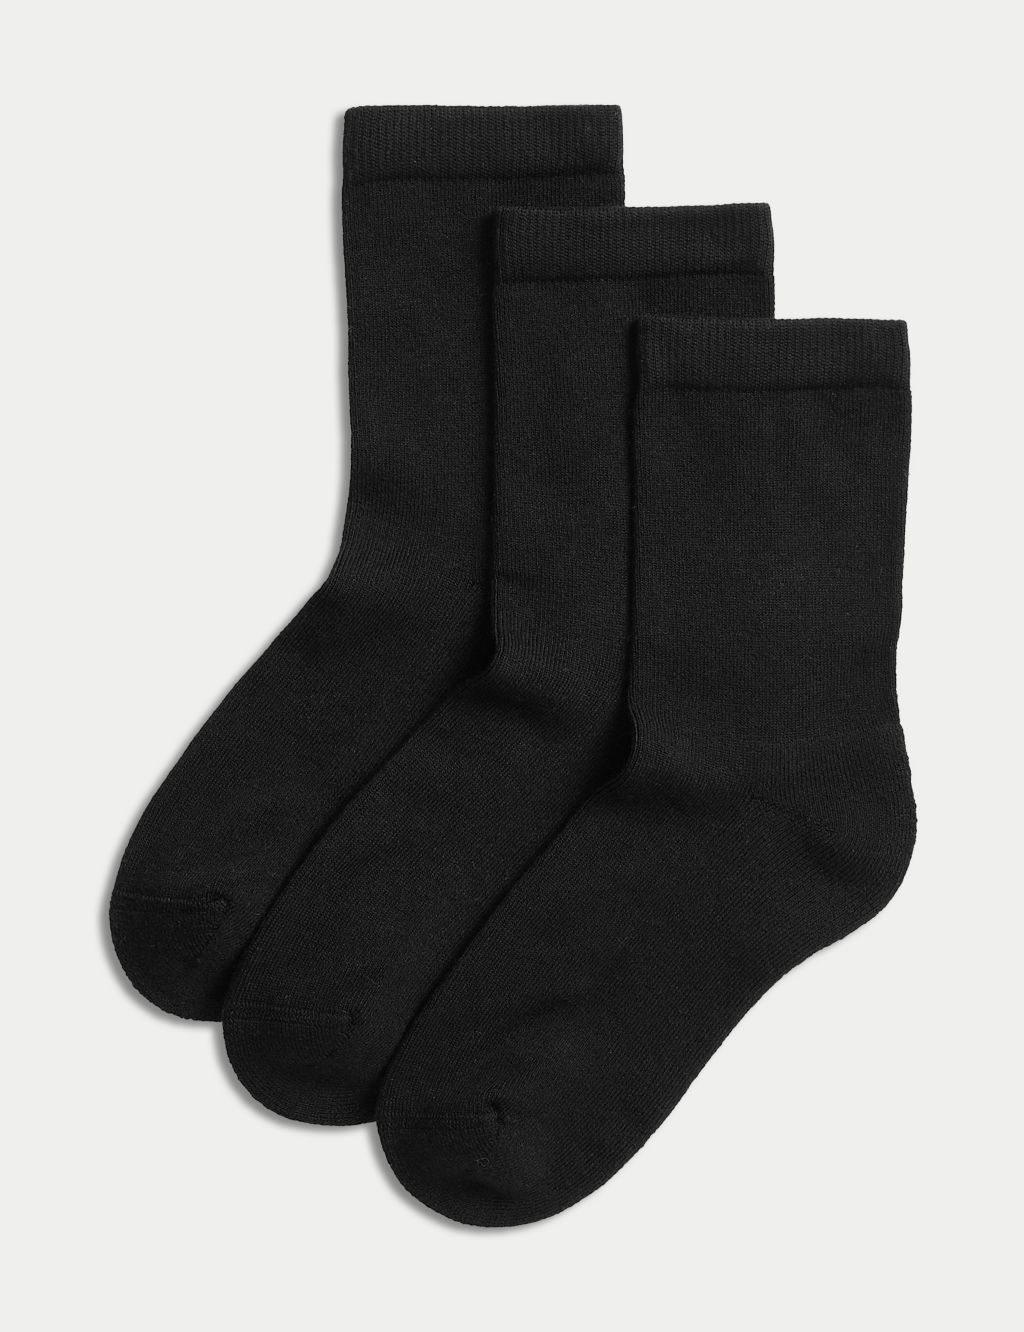 Scholl Flight Socks Cotton Small Size 3-6